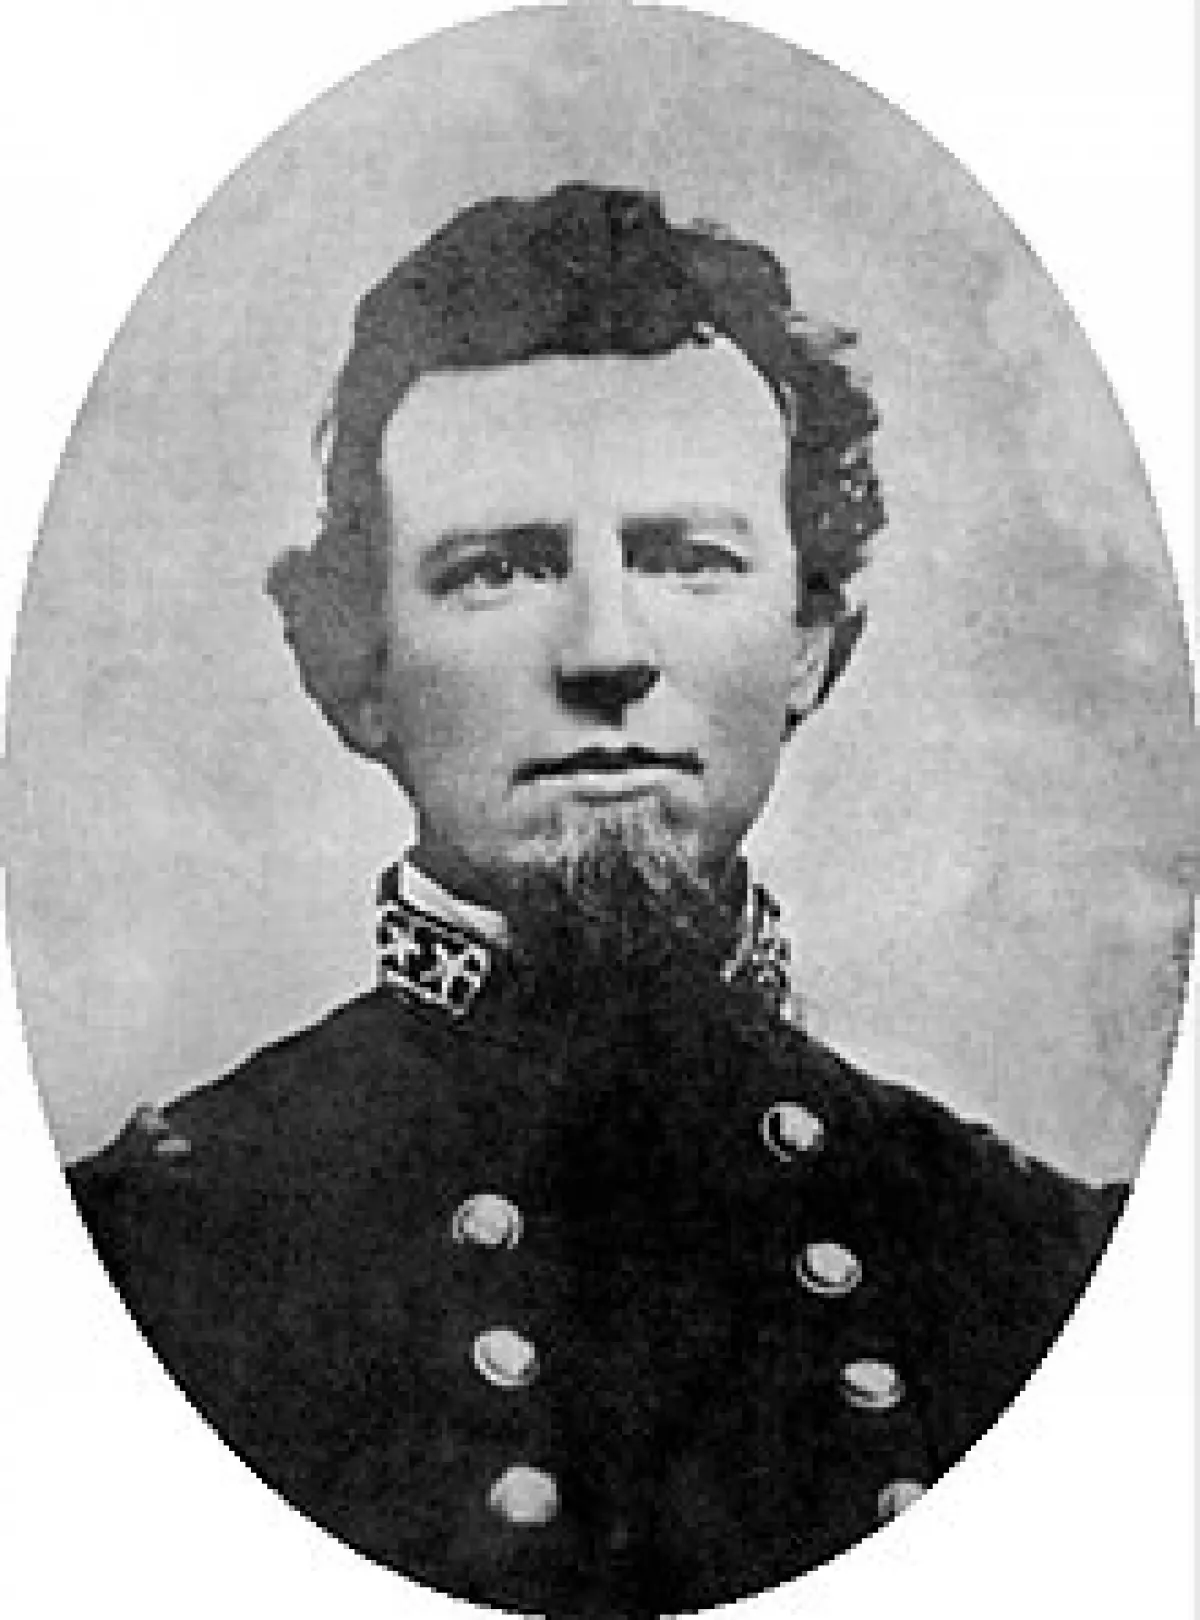 McRae in the uniform of the Arkansas Guards